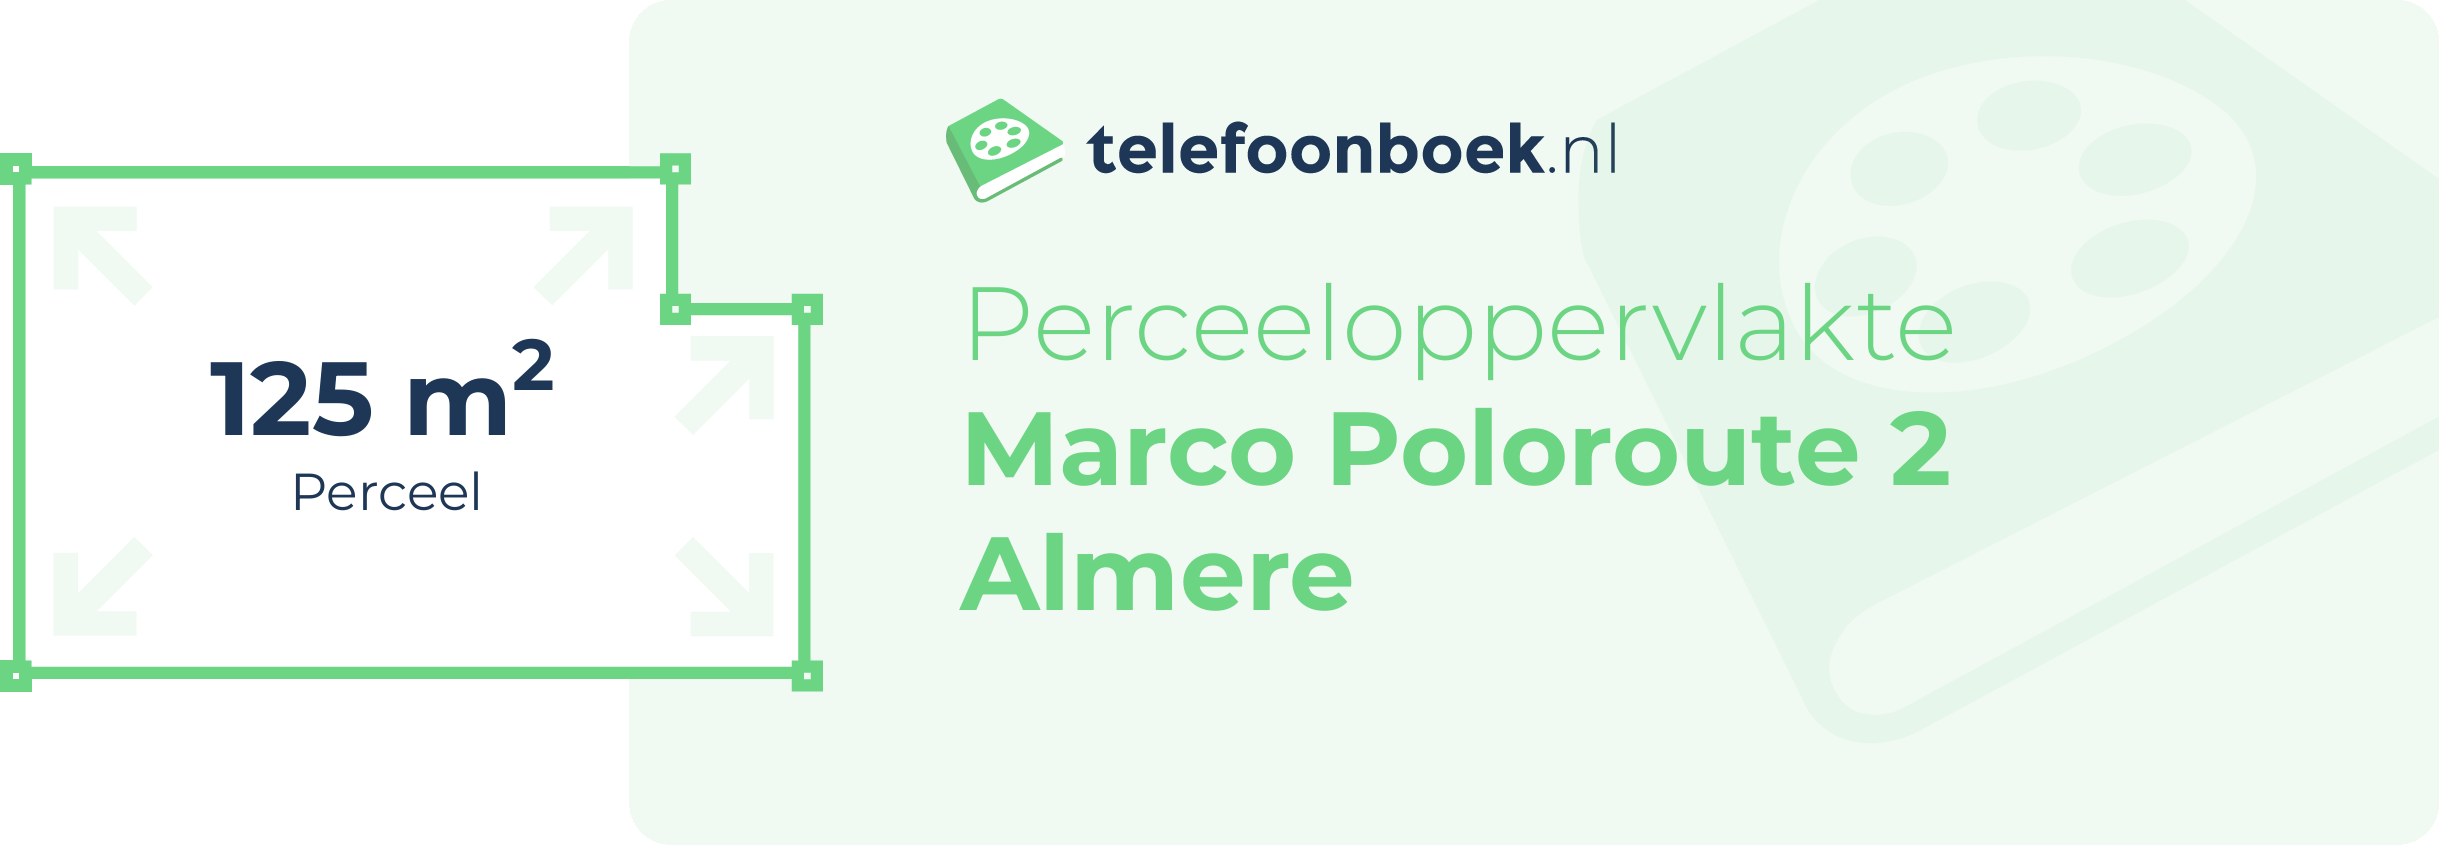 Perceeloppervlakte Marco Poloroute 2 Almere